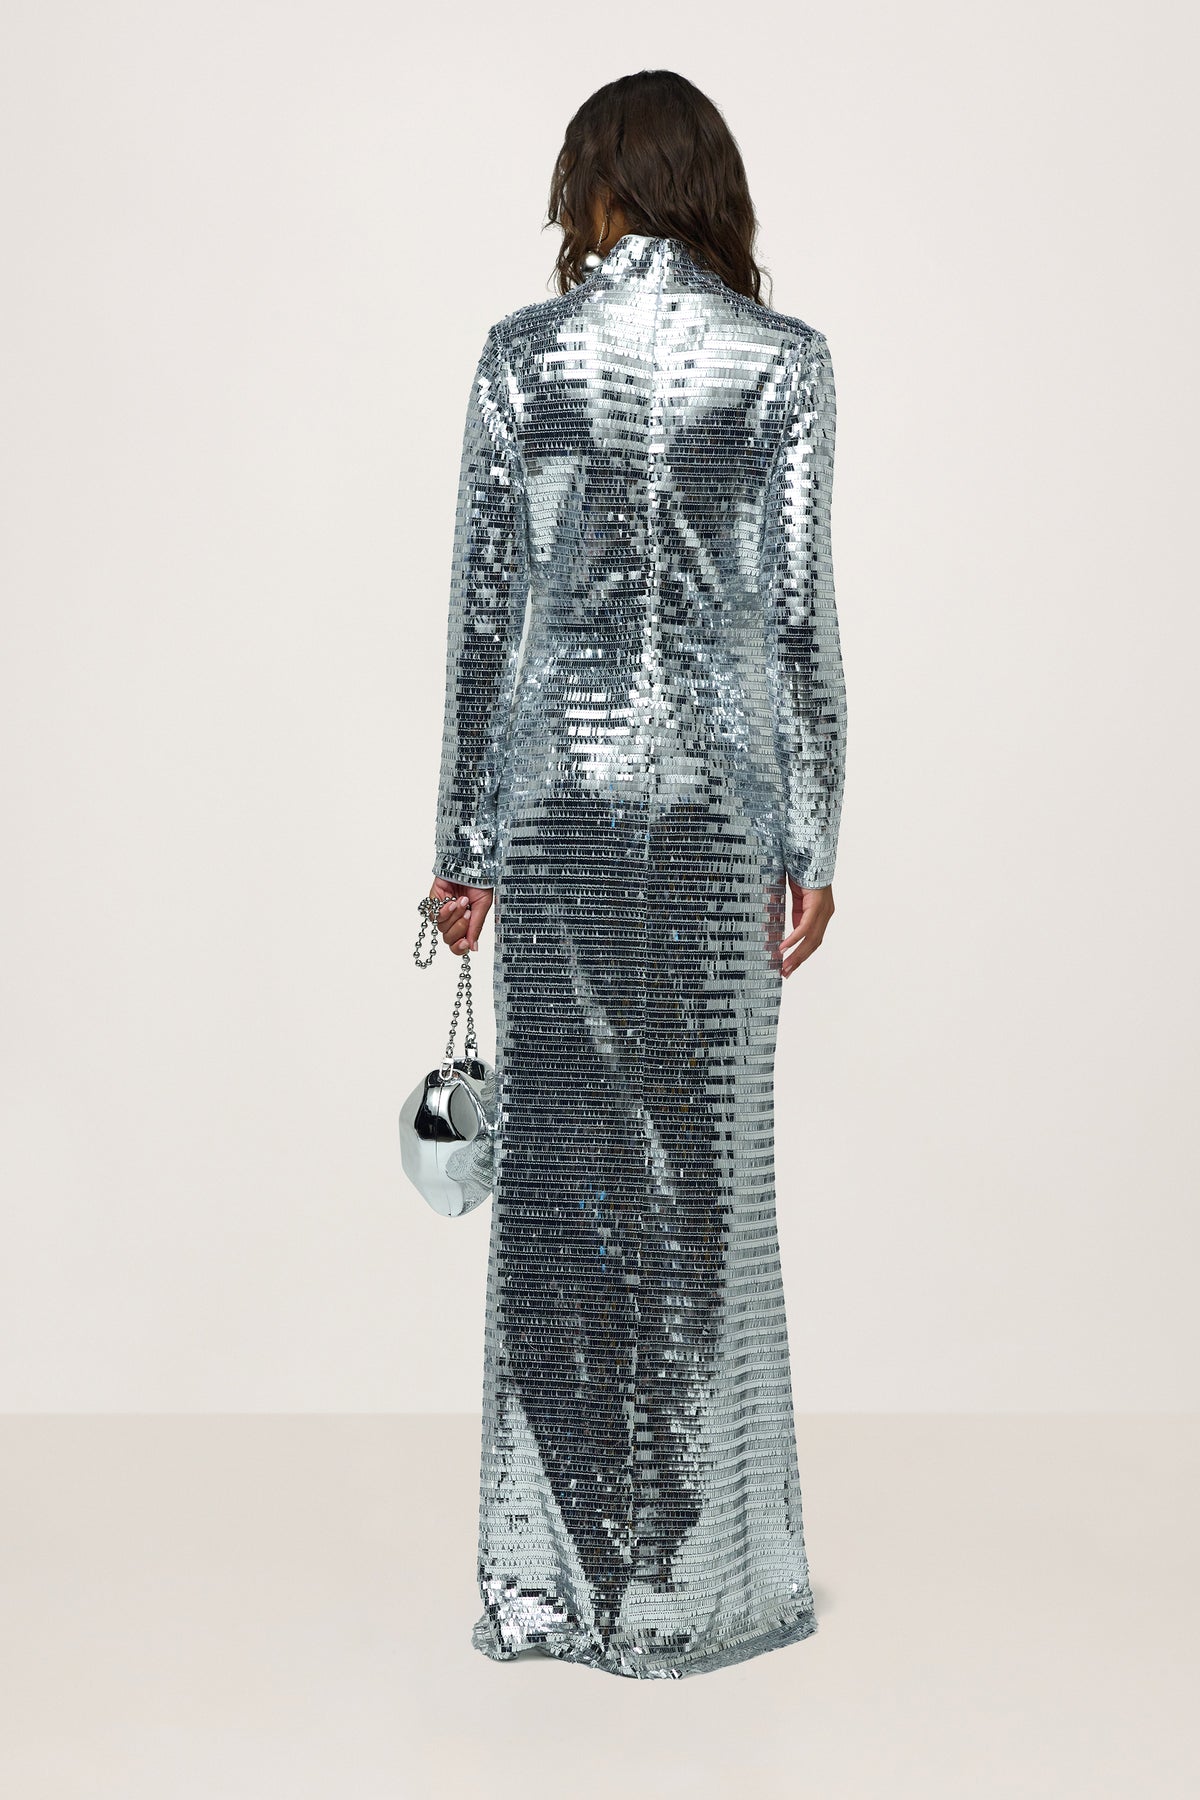 Sequin Sculpty Dress in Satellite Silver